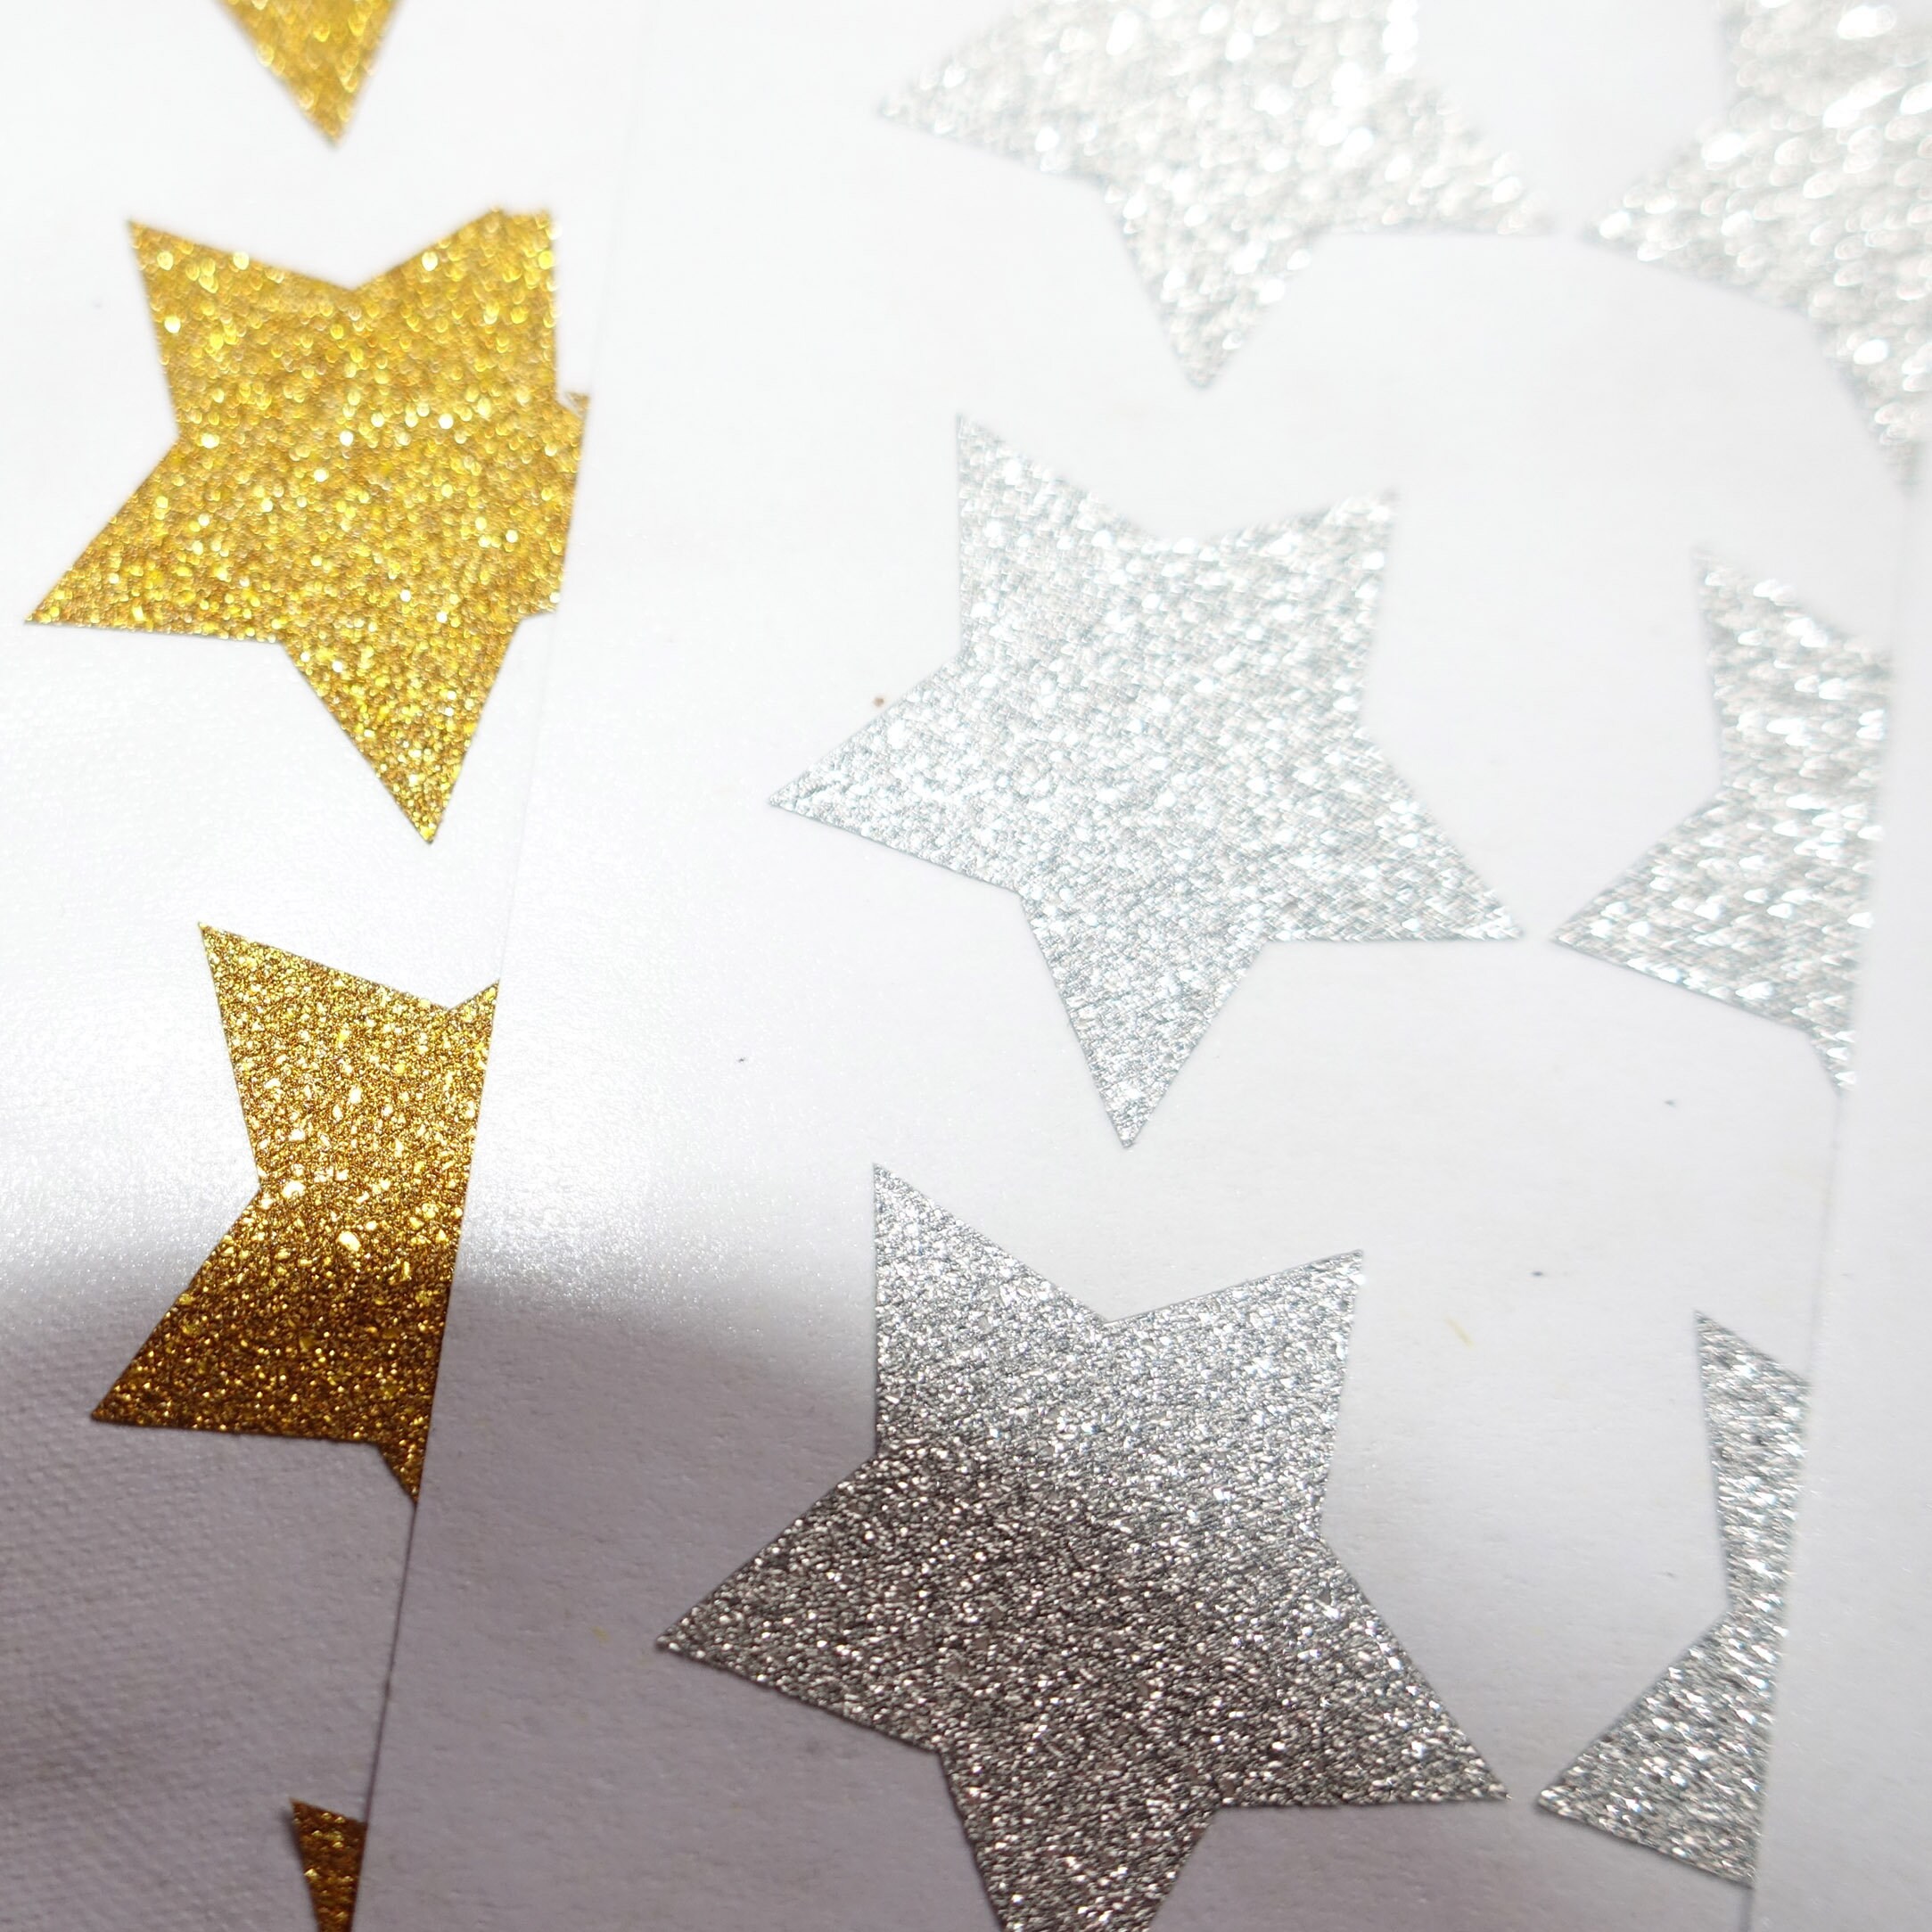 Gold Glitter Stars Stickers